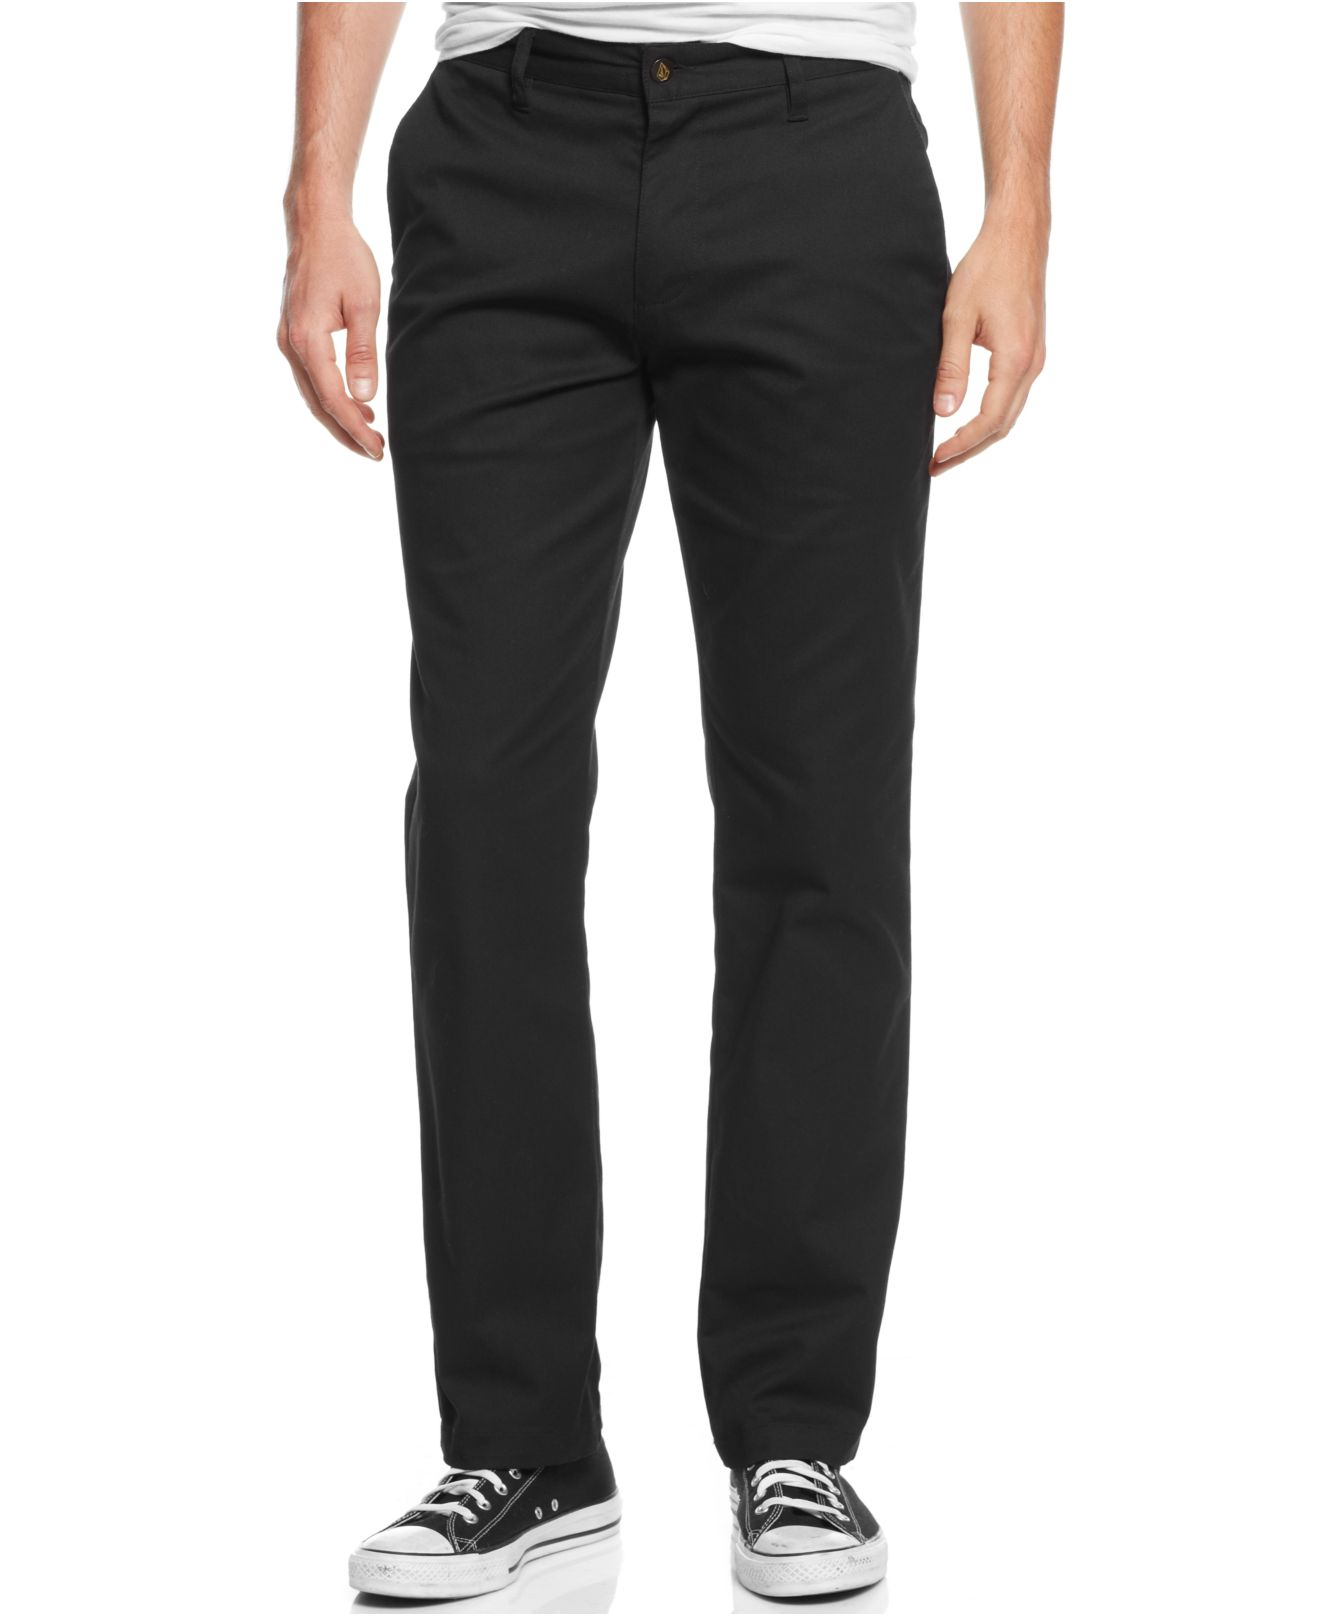 Lyst - Volcom Men's Frickin Modern-fit Stretch Chino Pants in Black for Men